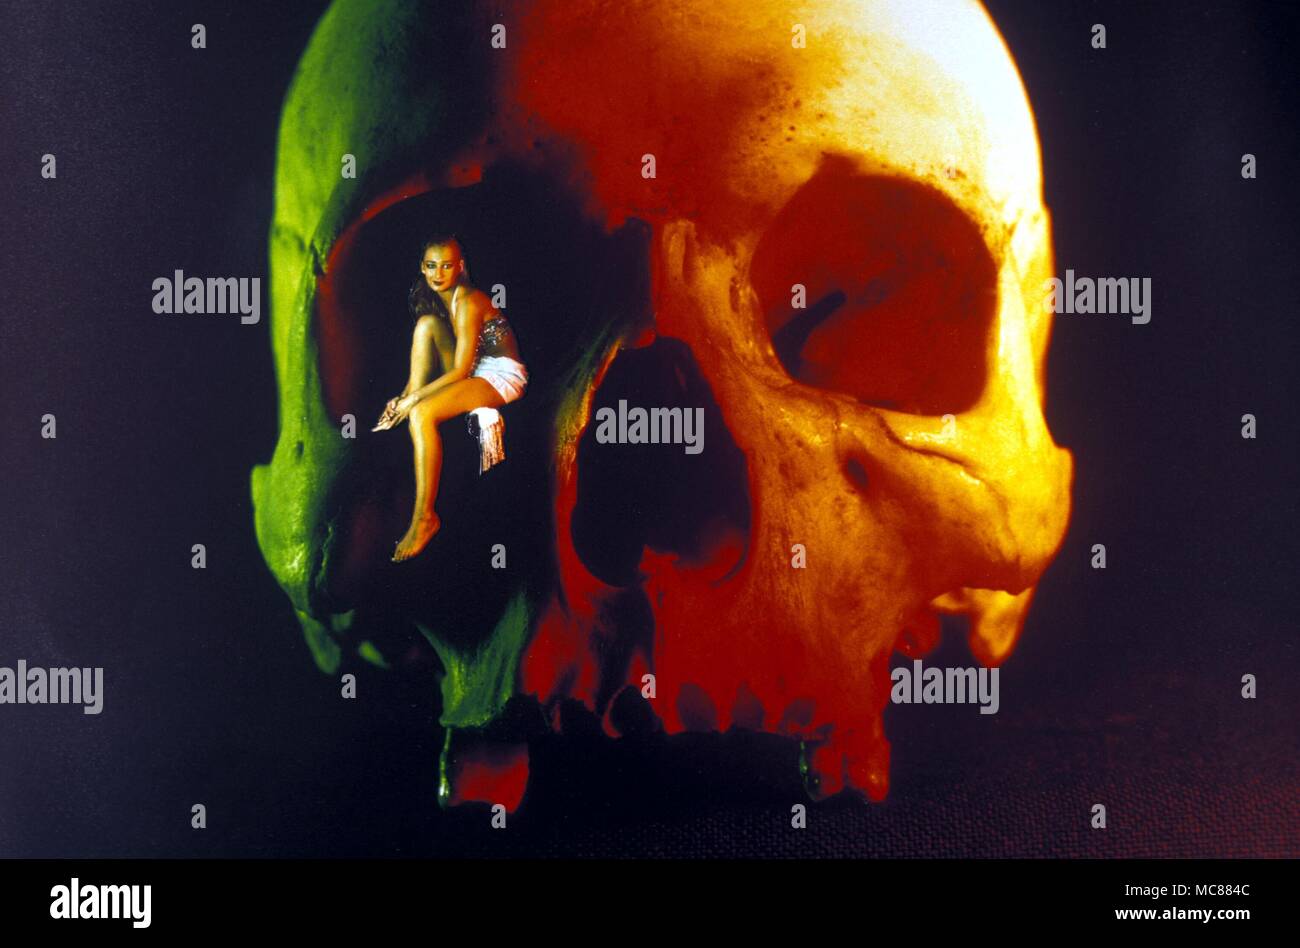 Fantasy. Girl sitting in the eye socket of a human skull. Stock Photo